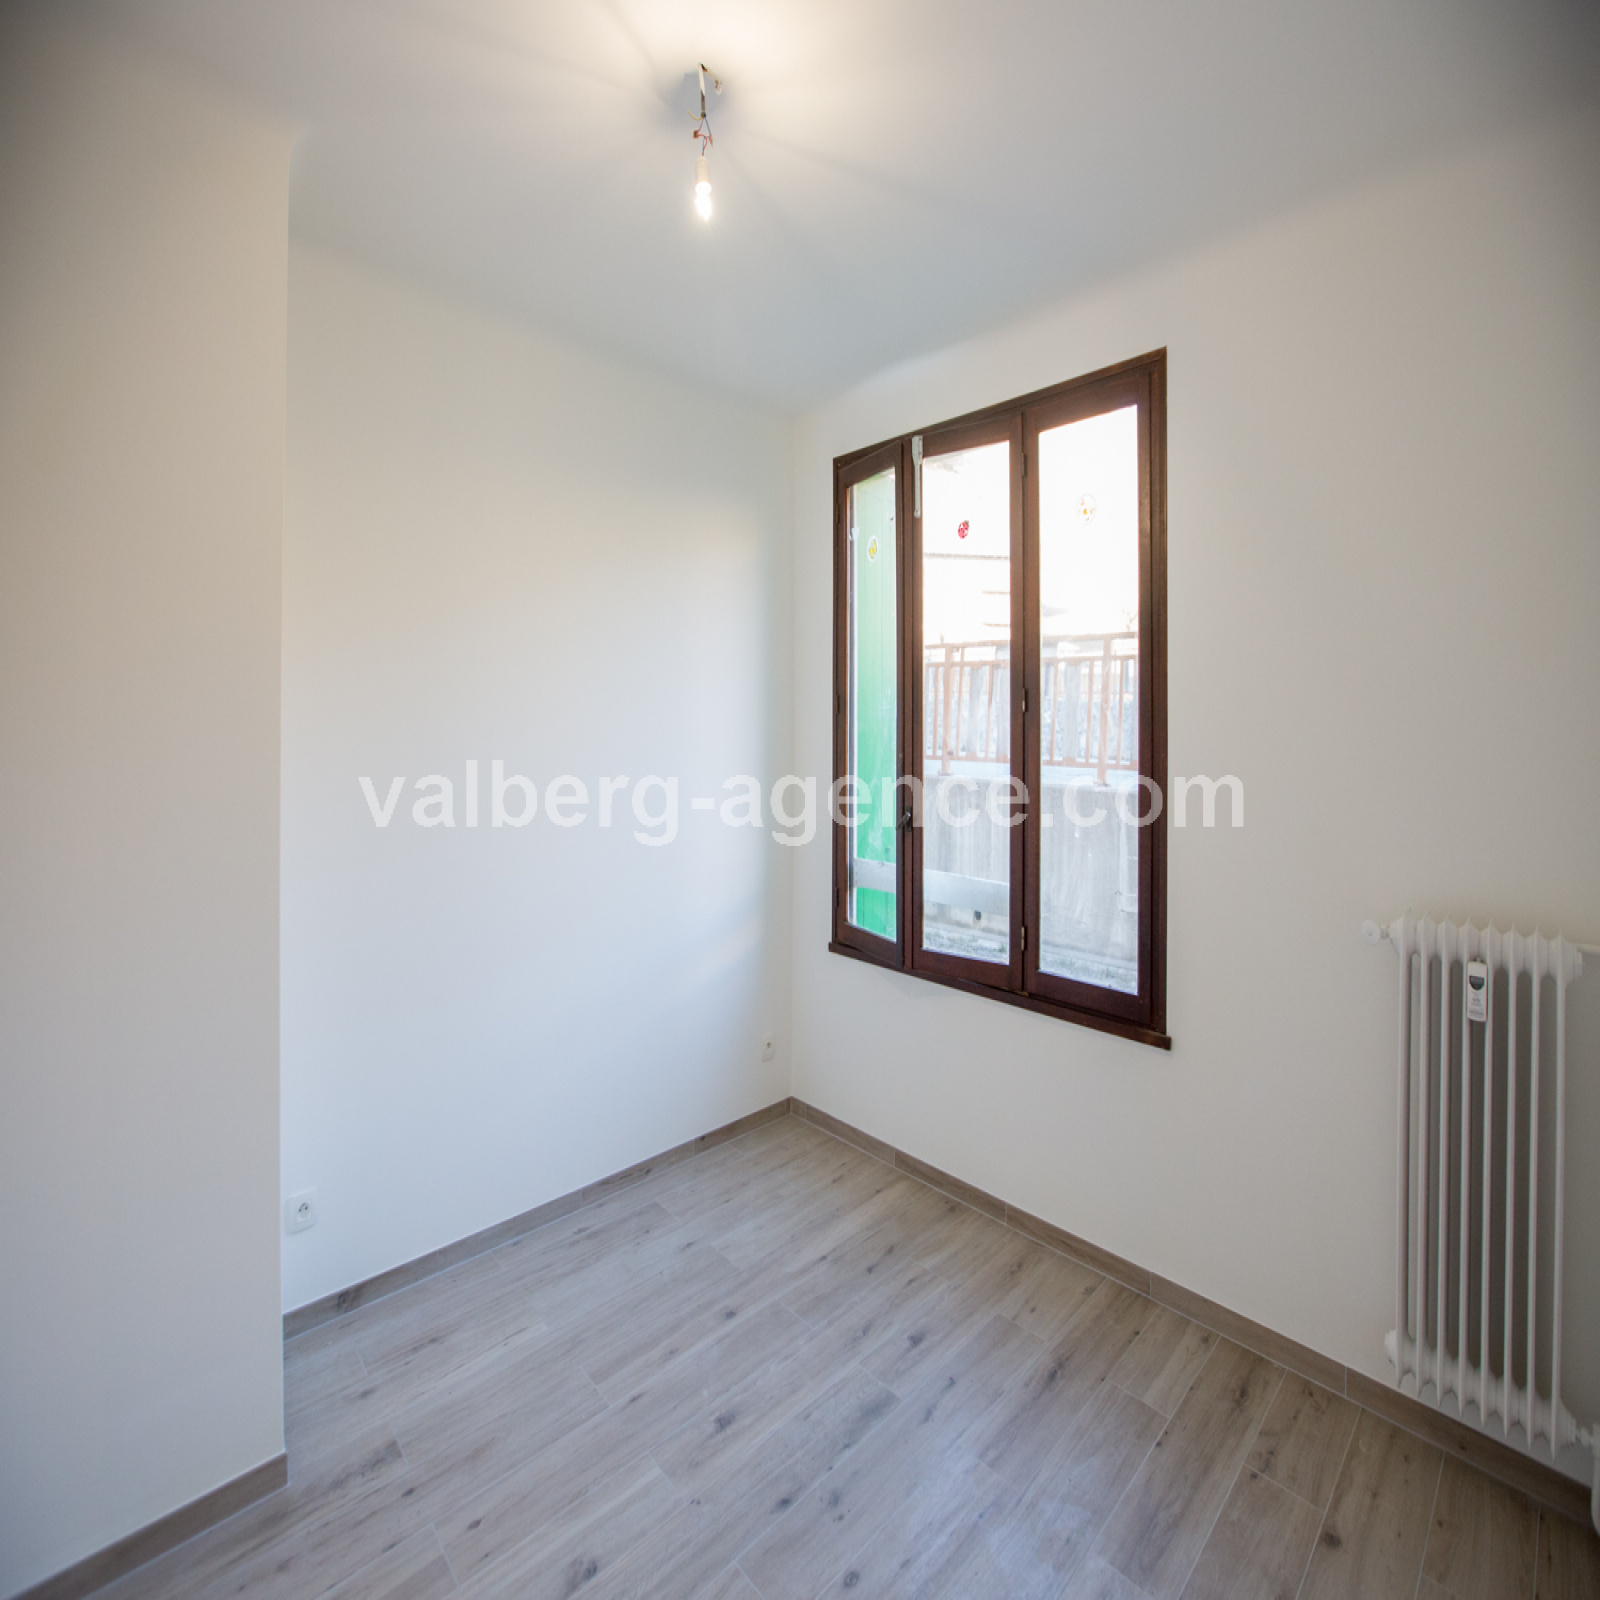 Image_, Appartement, Valberg, ref :2908